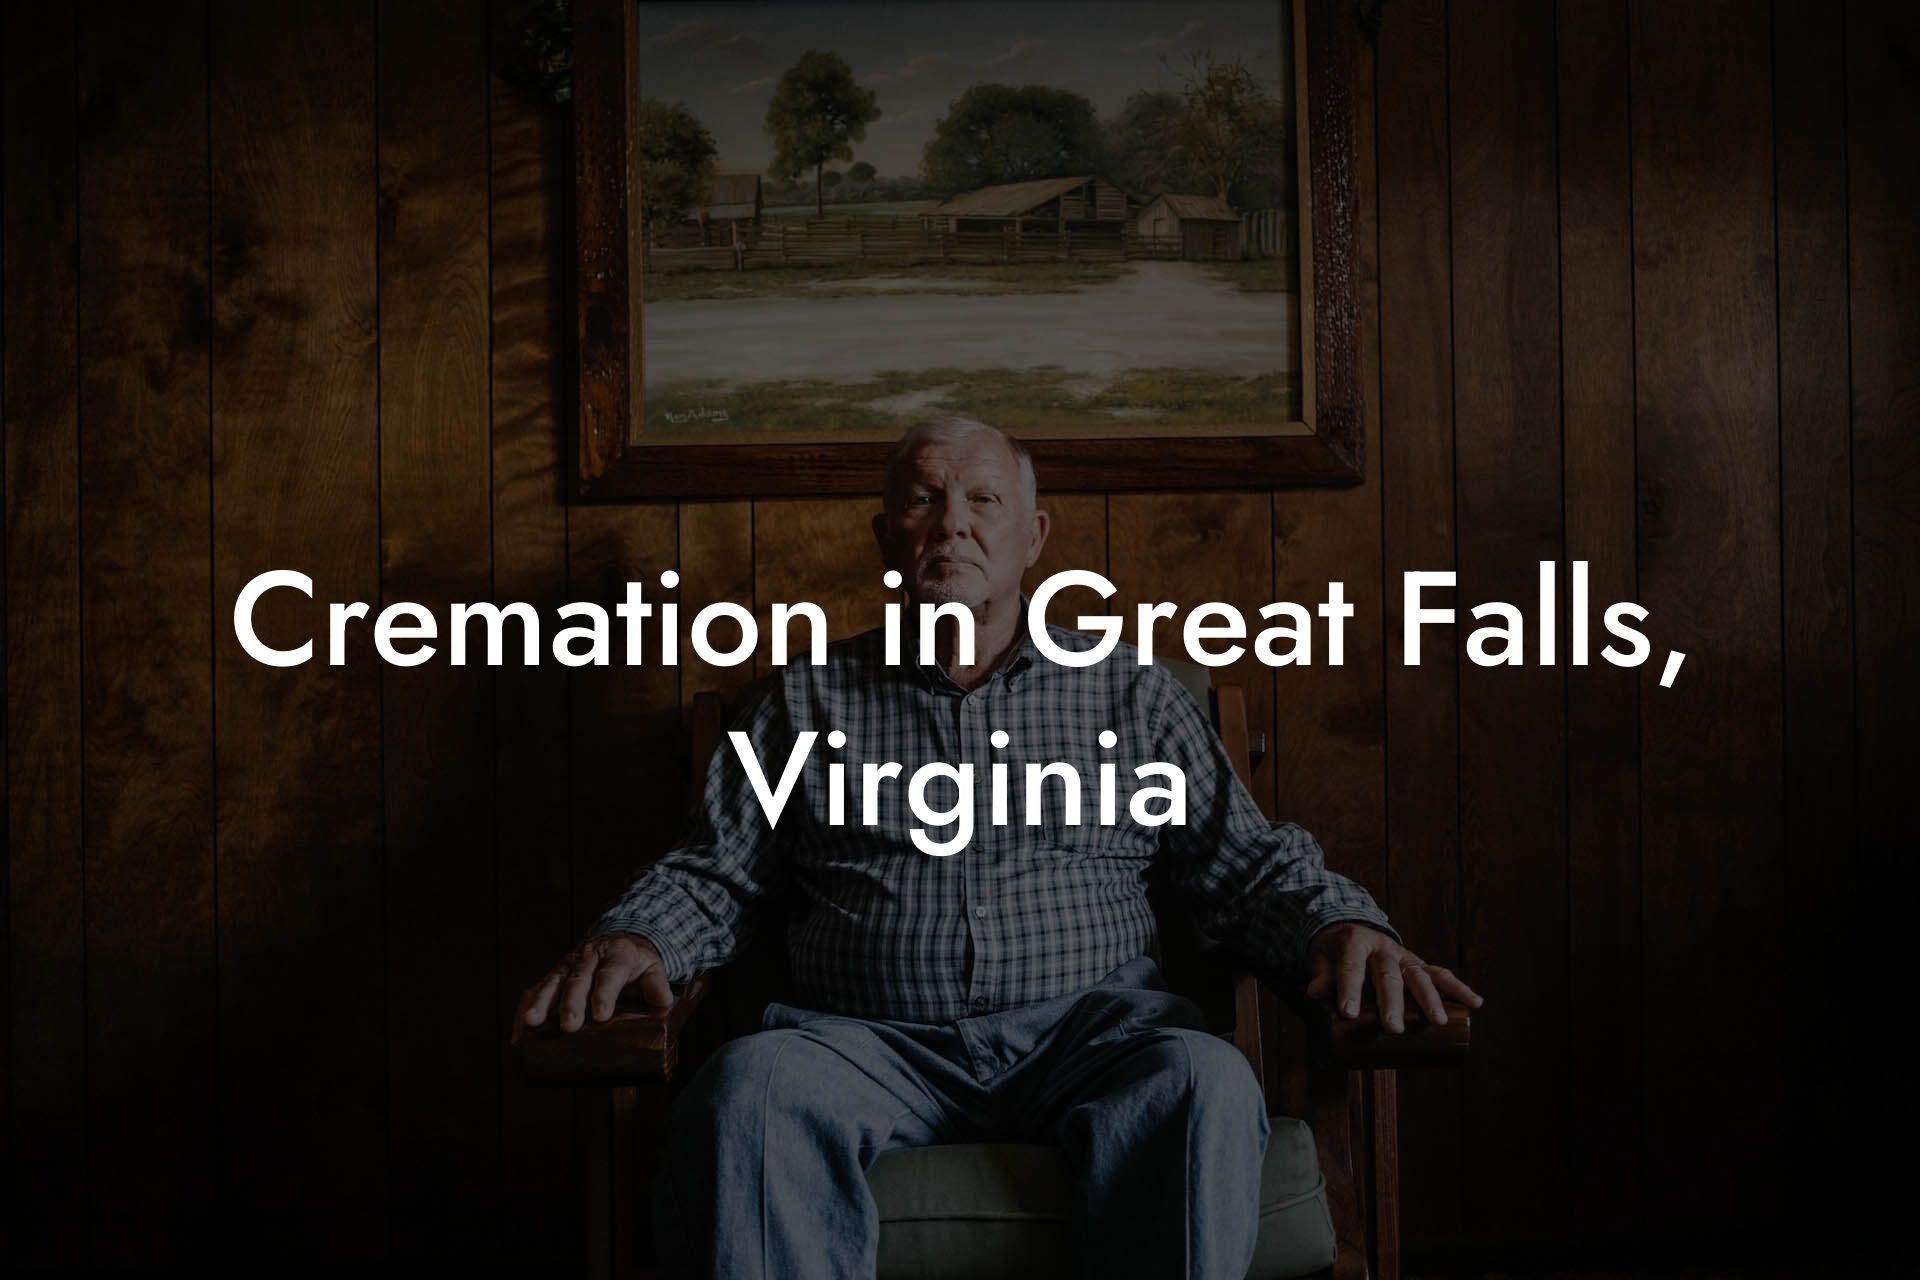 Cremation in Great Falls, Virginia